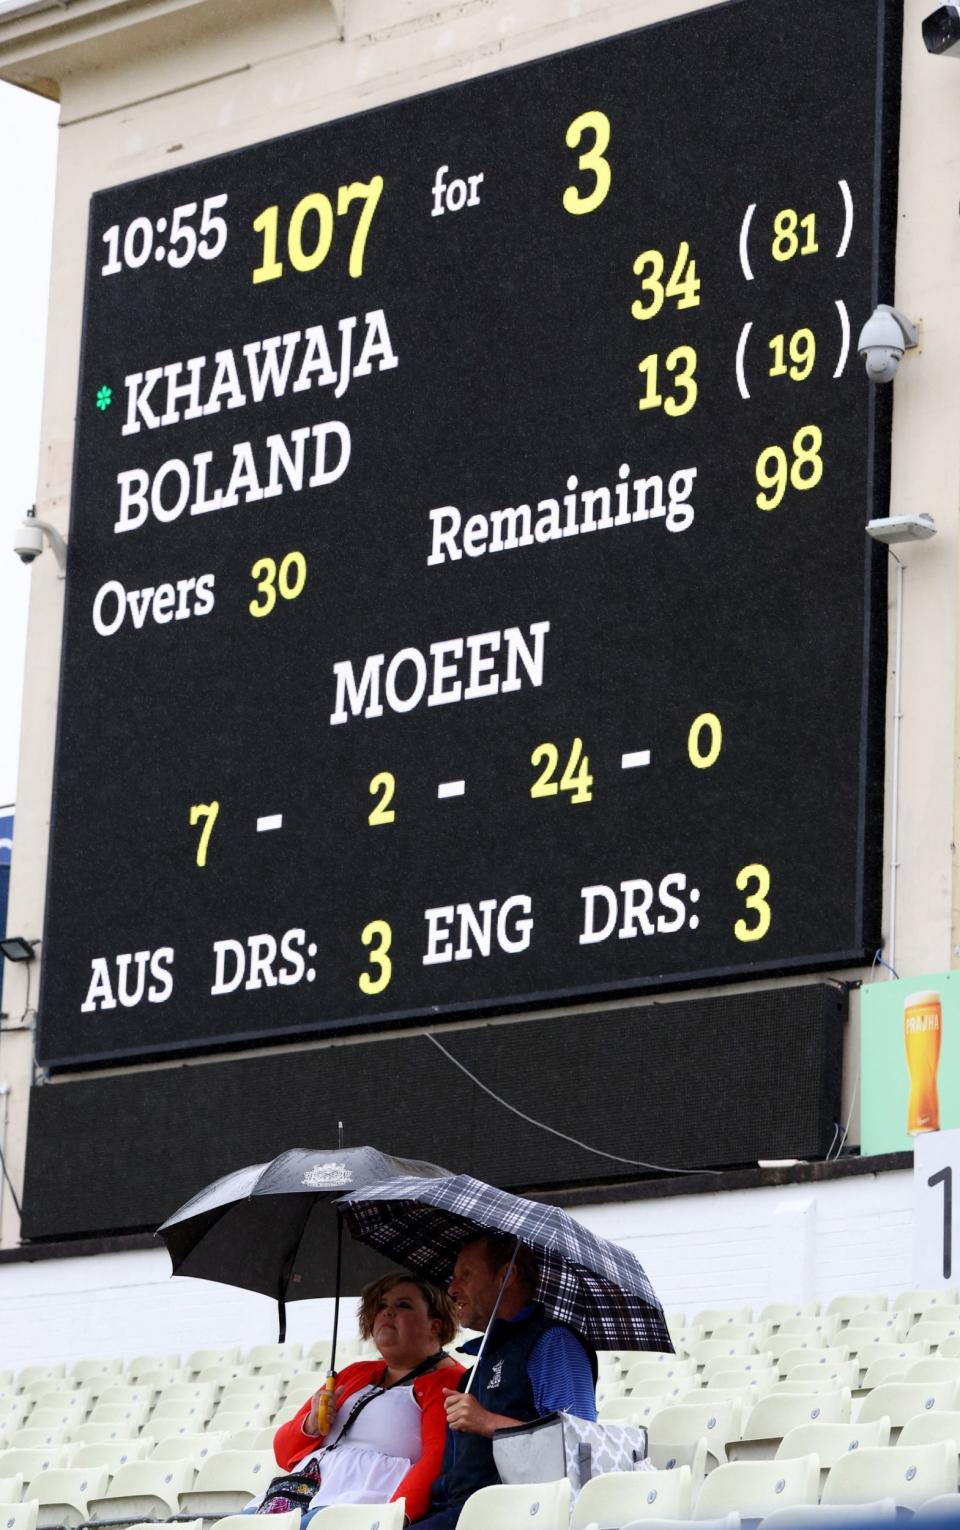 The scoreboard at Edgbaston